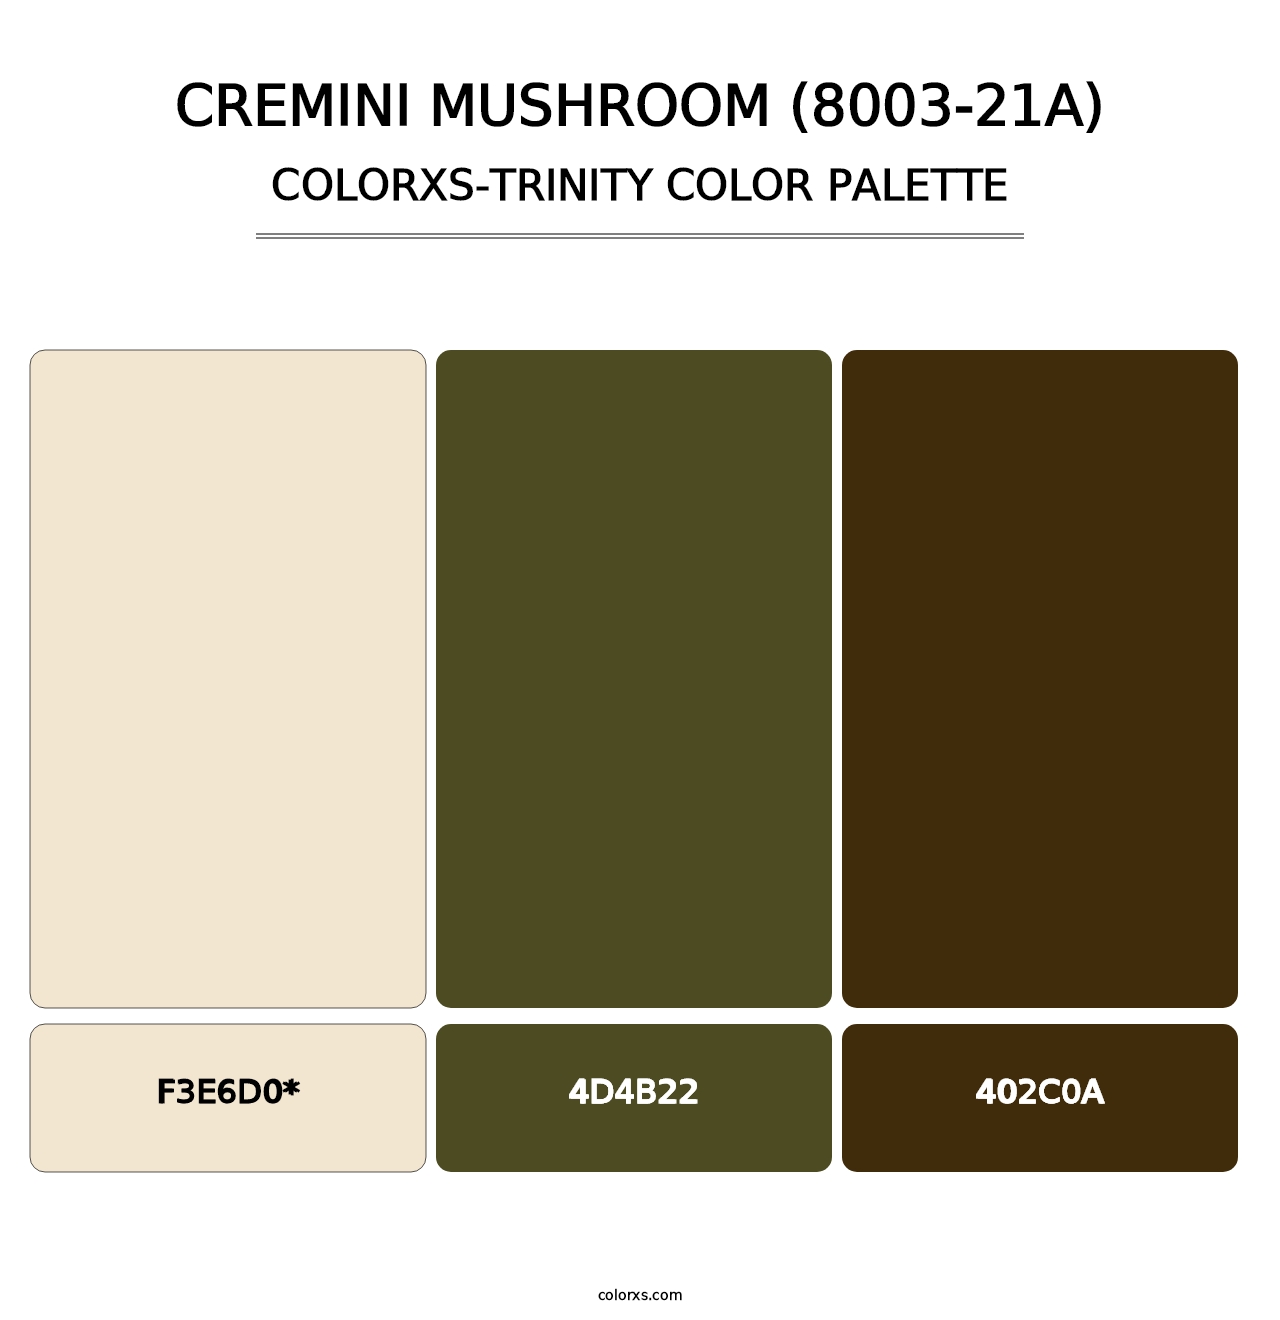 Cremini Mushroom (8003-21A) - Colorxs Trinity Palette